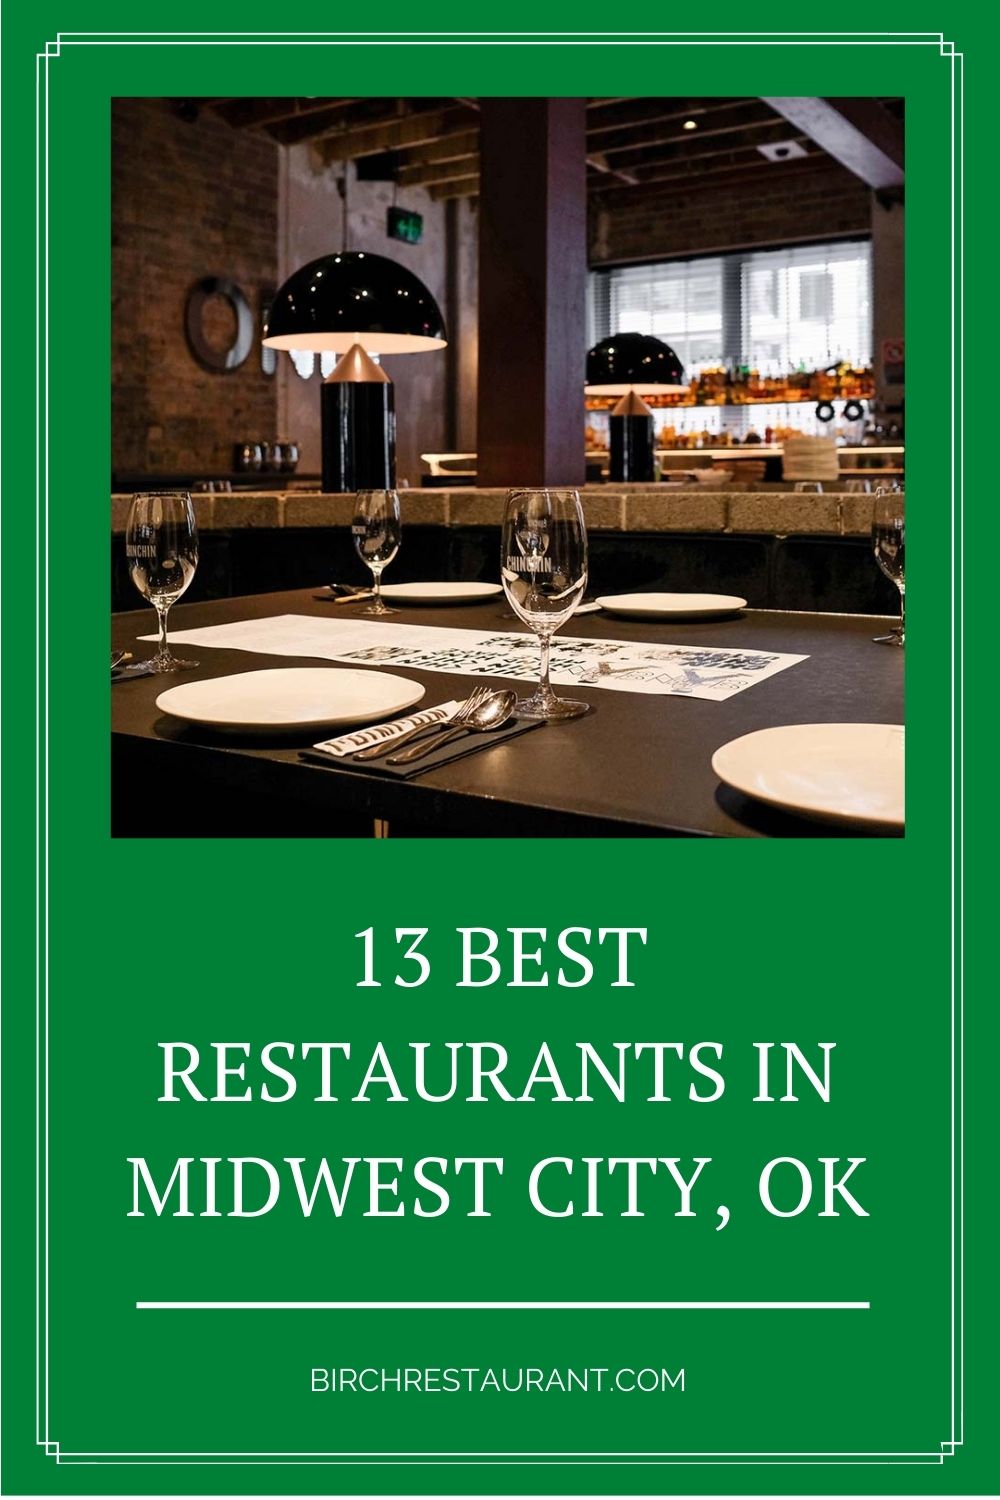 Best Restaurants in Midwest City